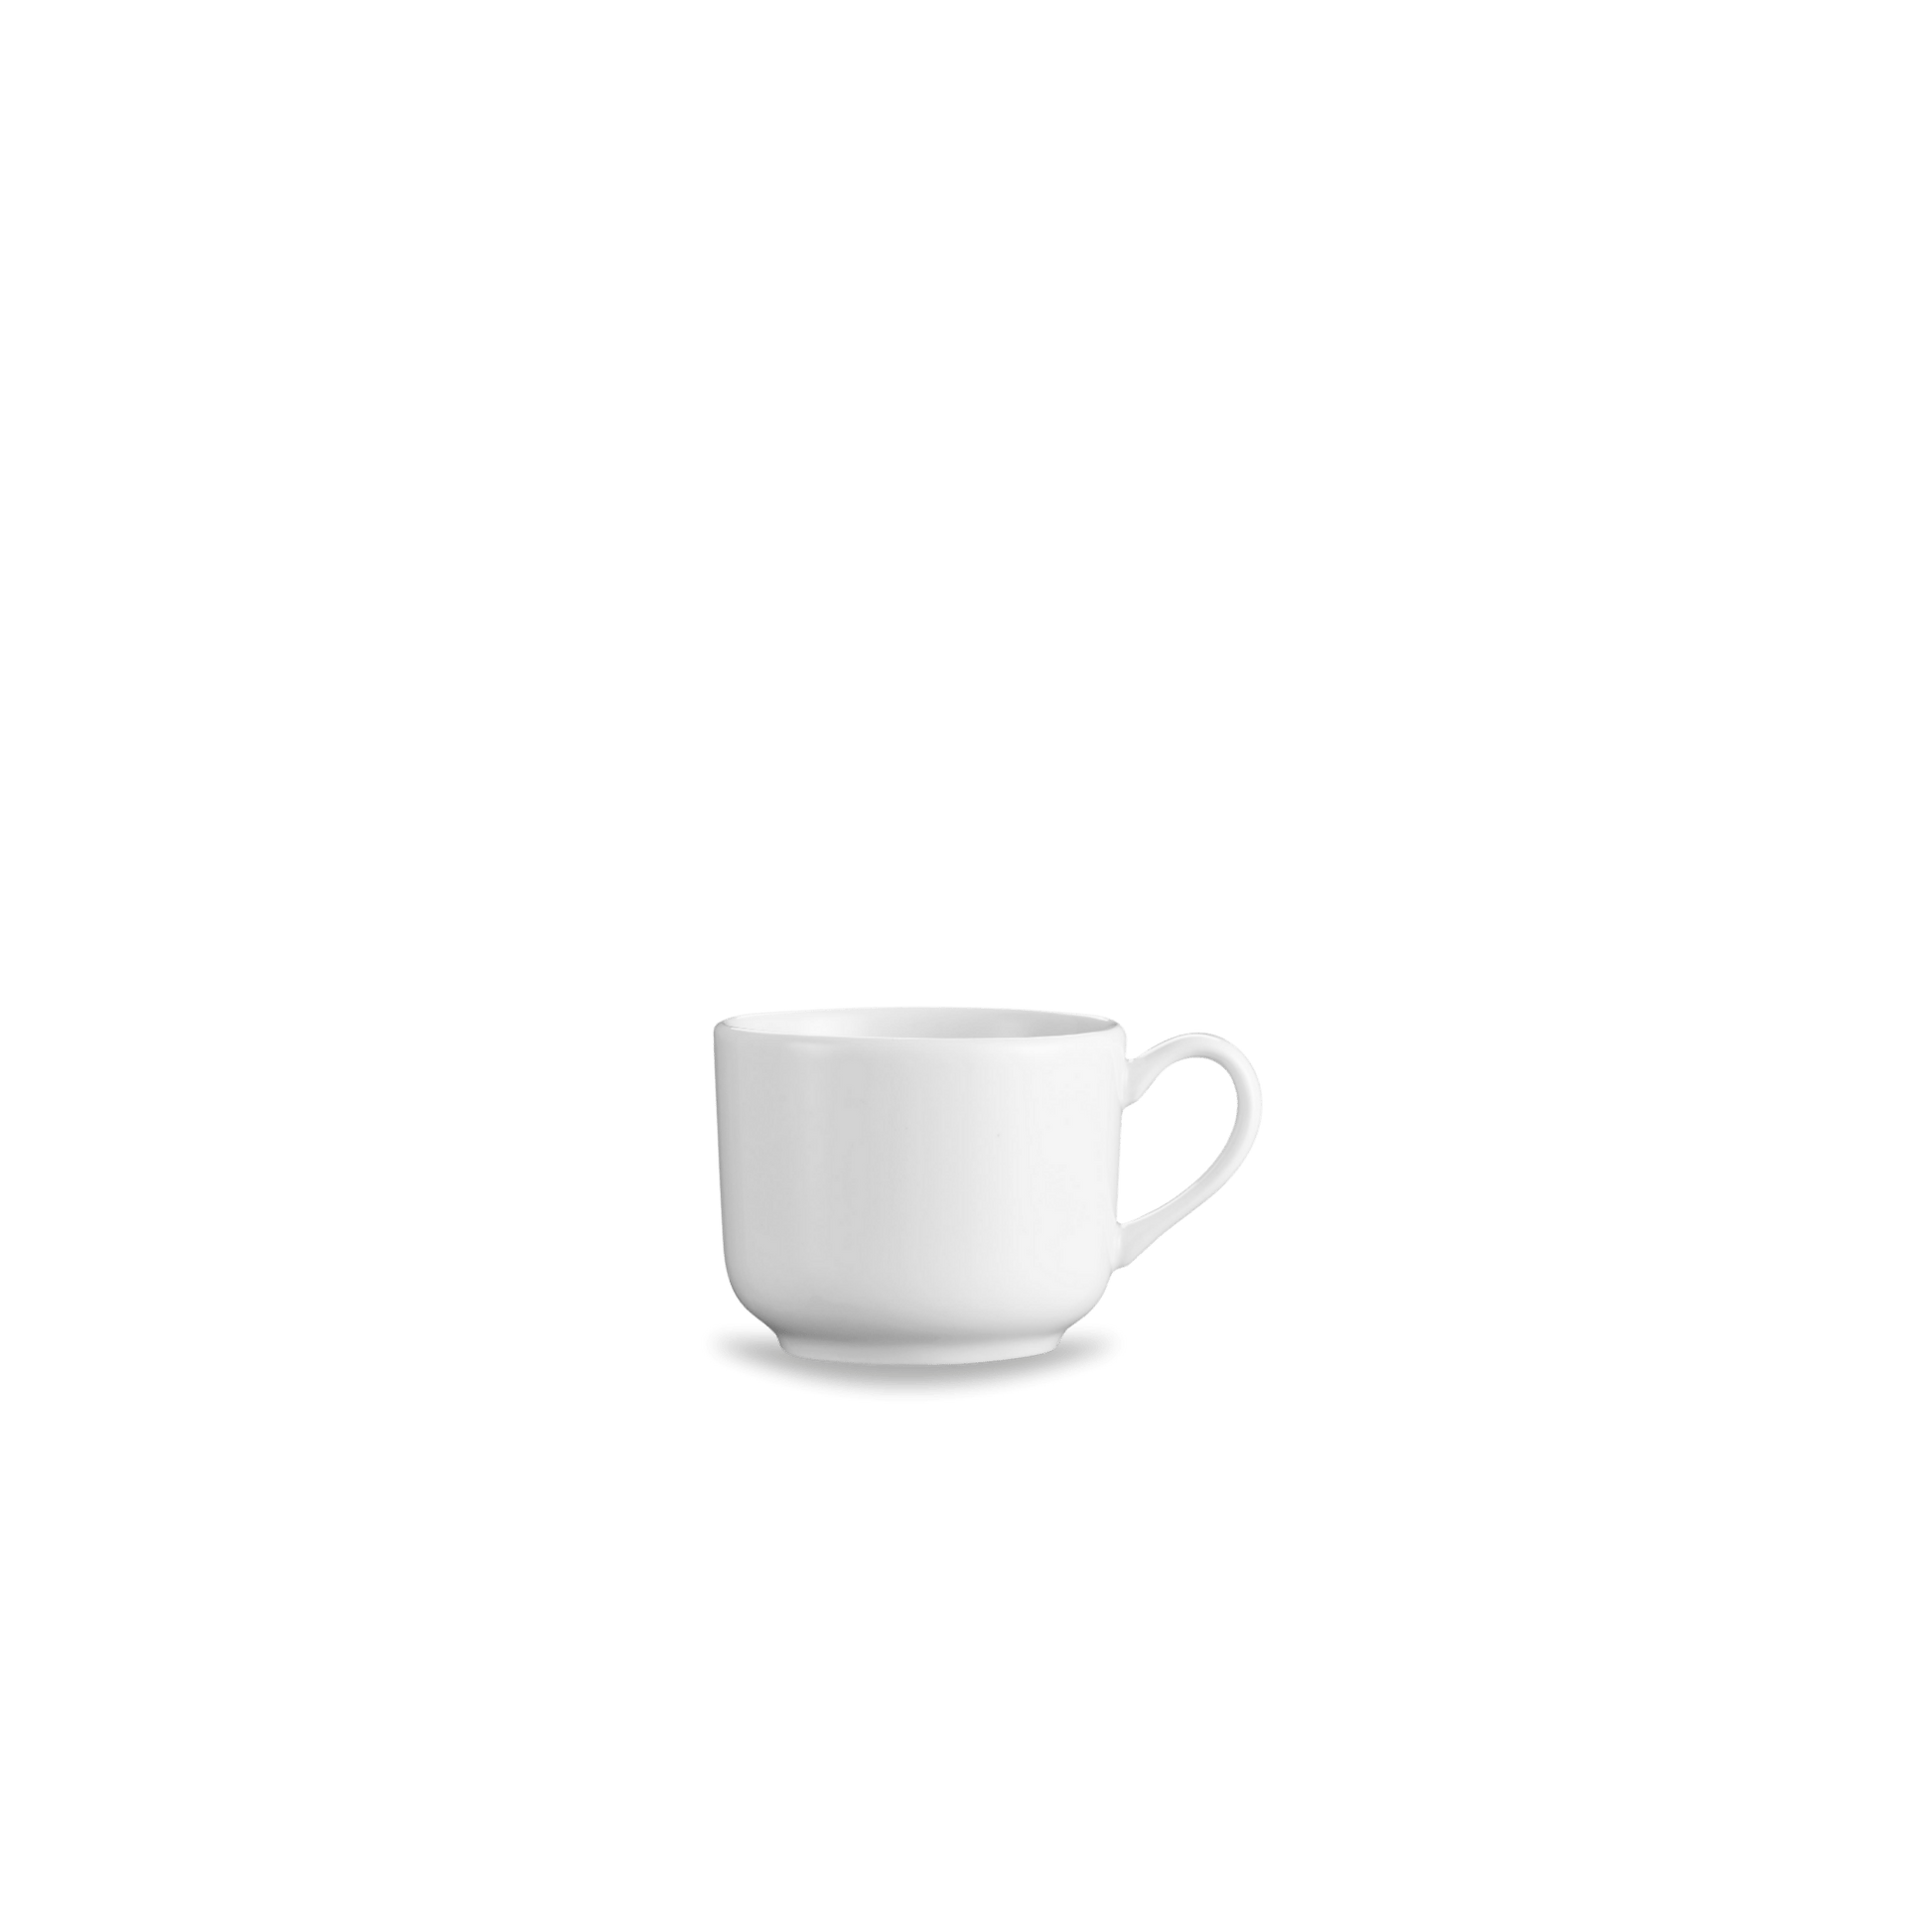 Pillivuyt Shop Cup Espresso - 2.25" diam x 2.5" H - 3 oz - Set of 4 Sancerre Cups, Sets of 4